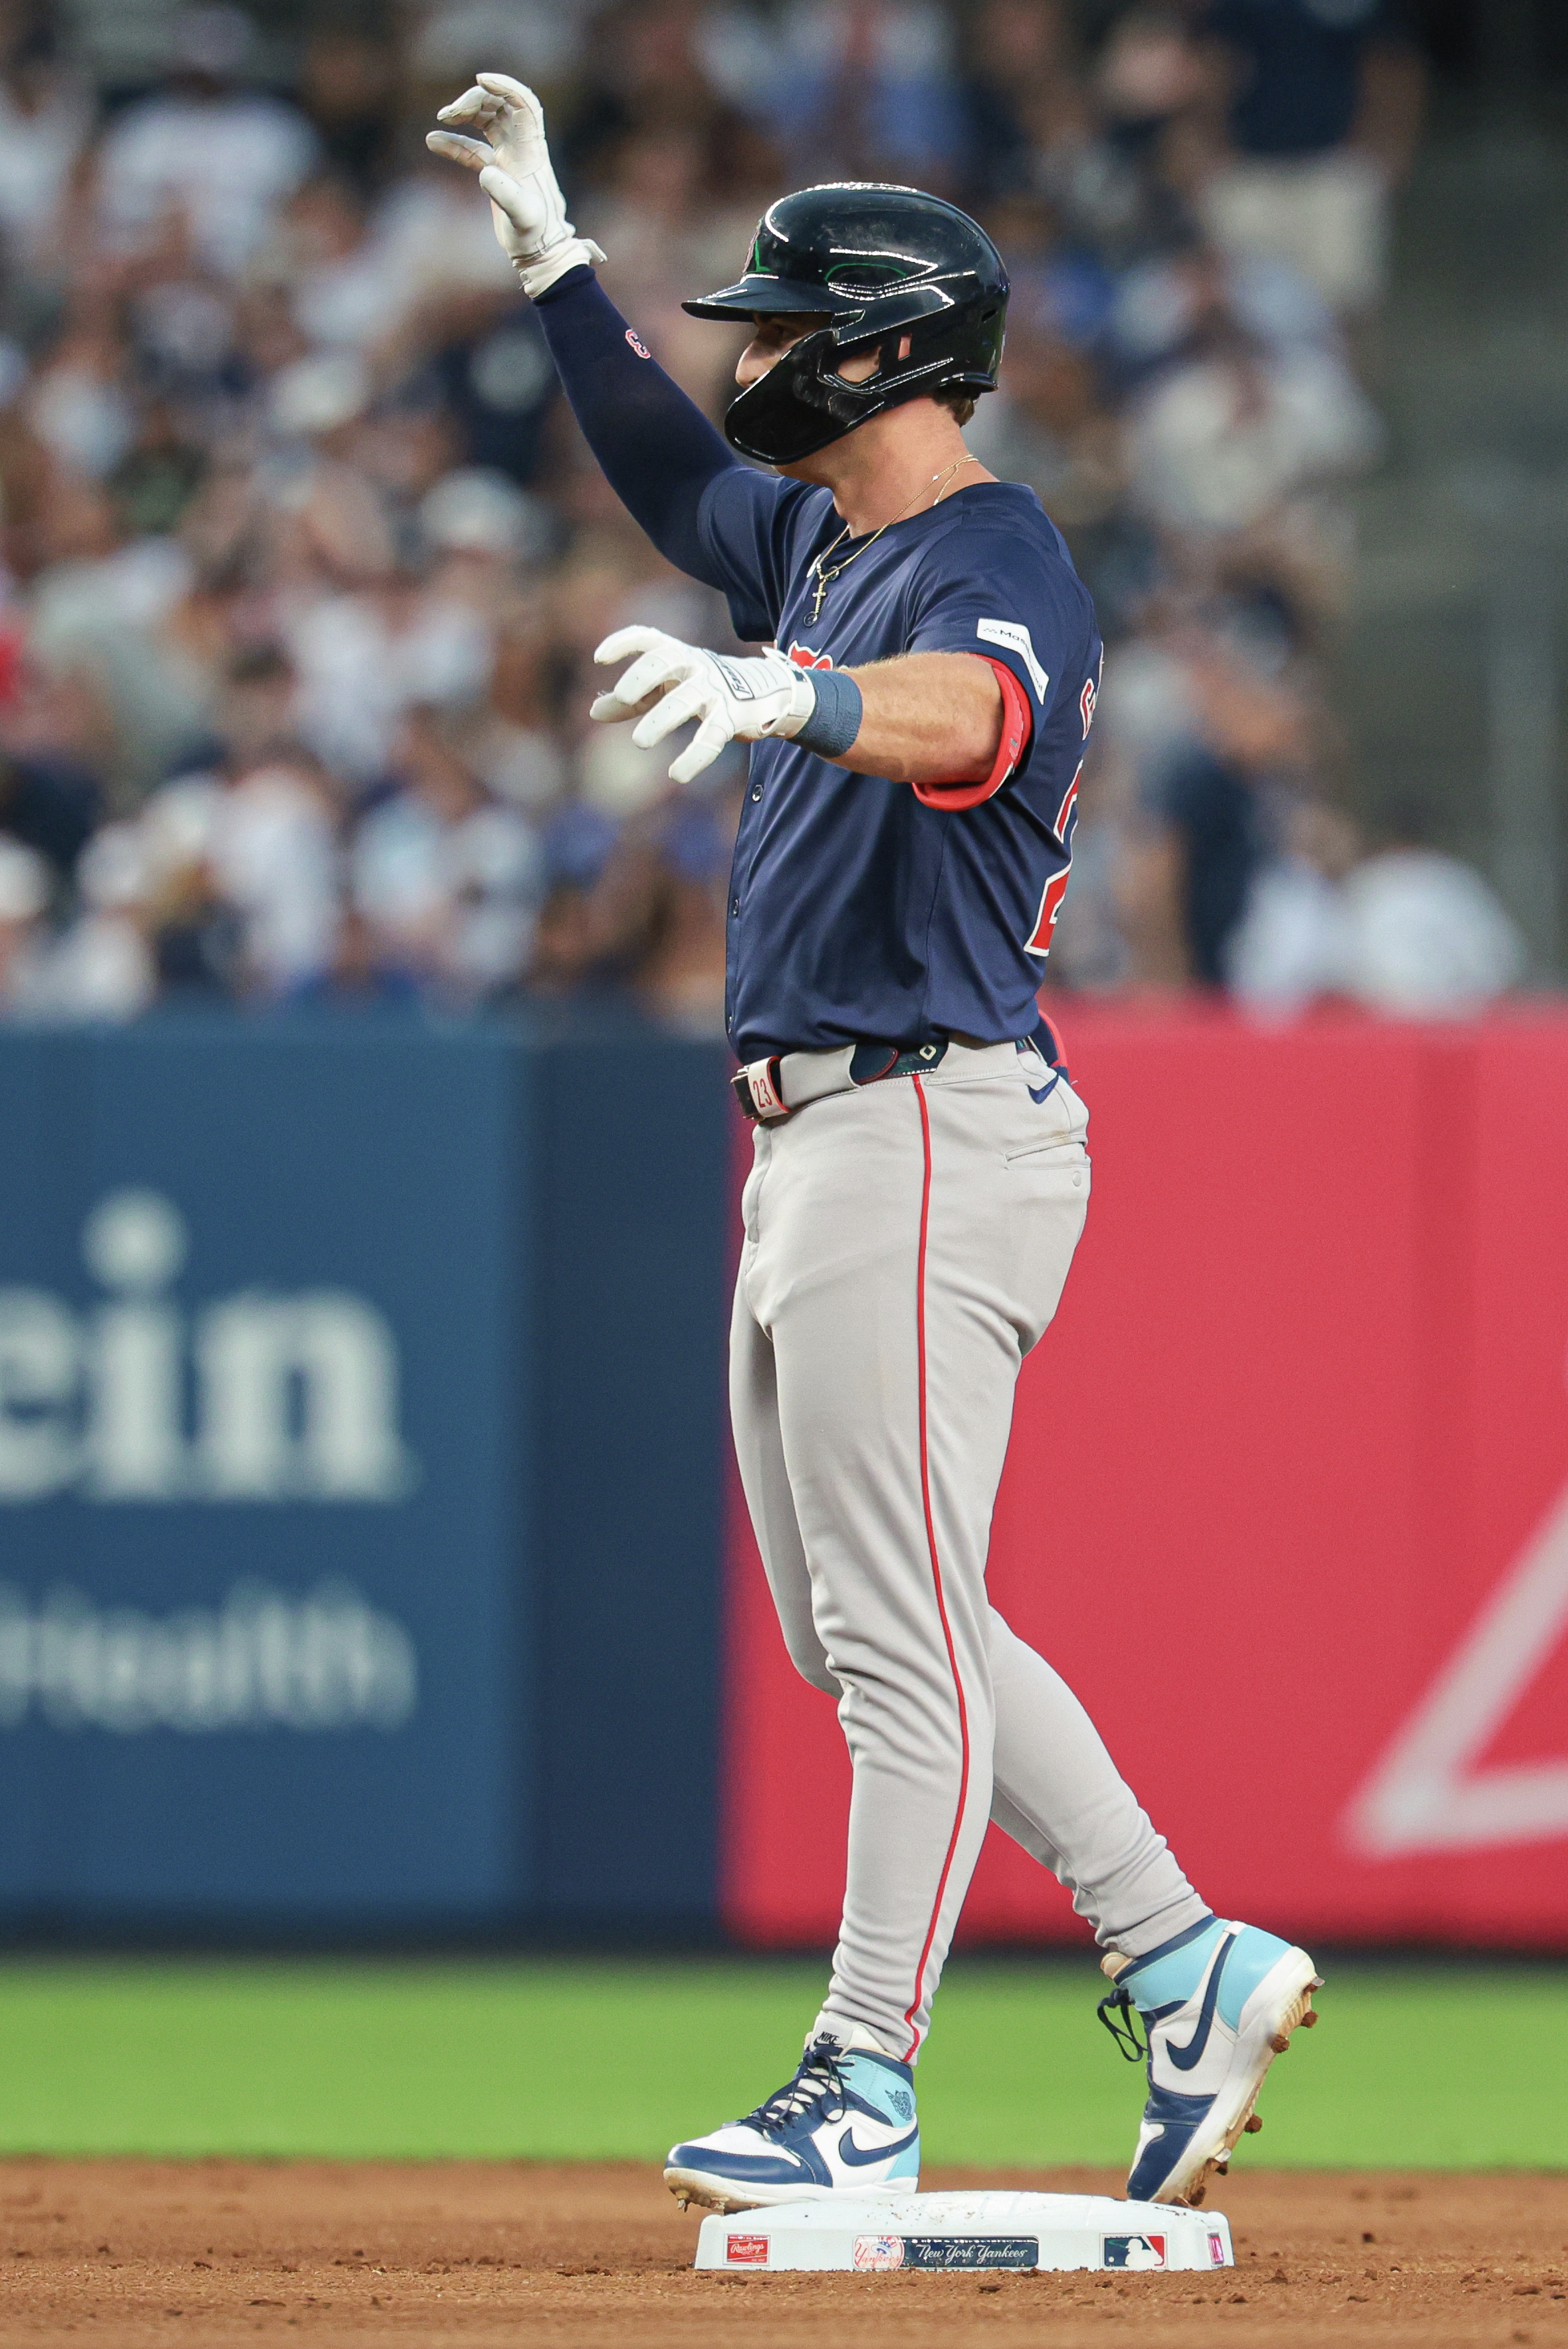 Romy Gonzalez hits his 1st Red Sox homerun!